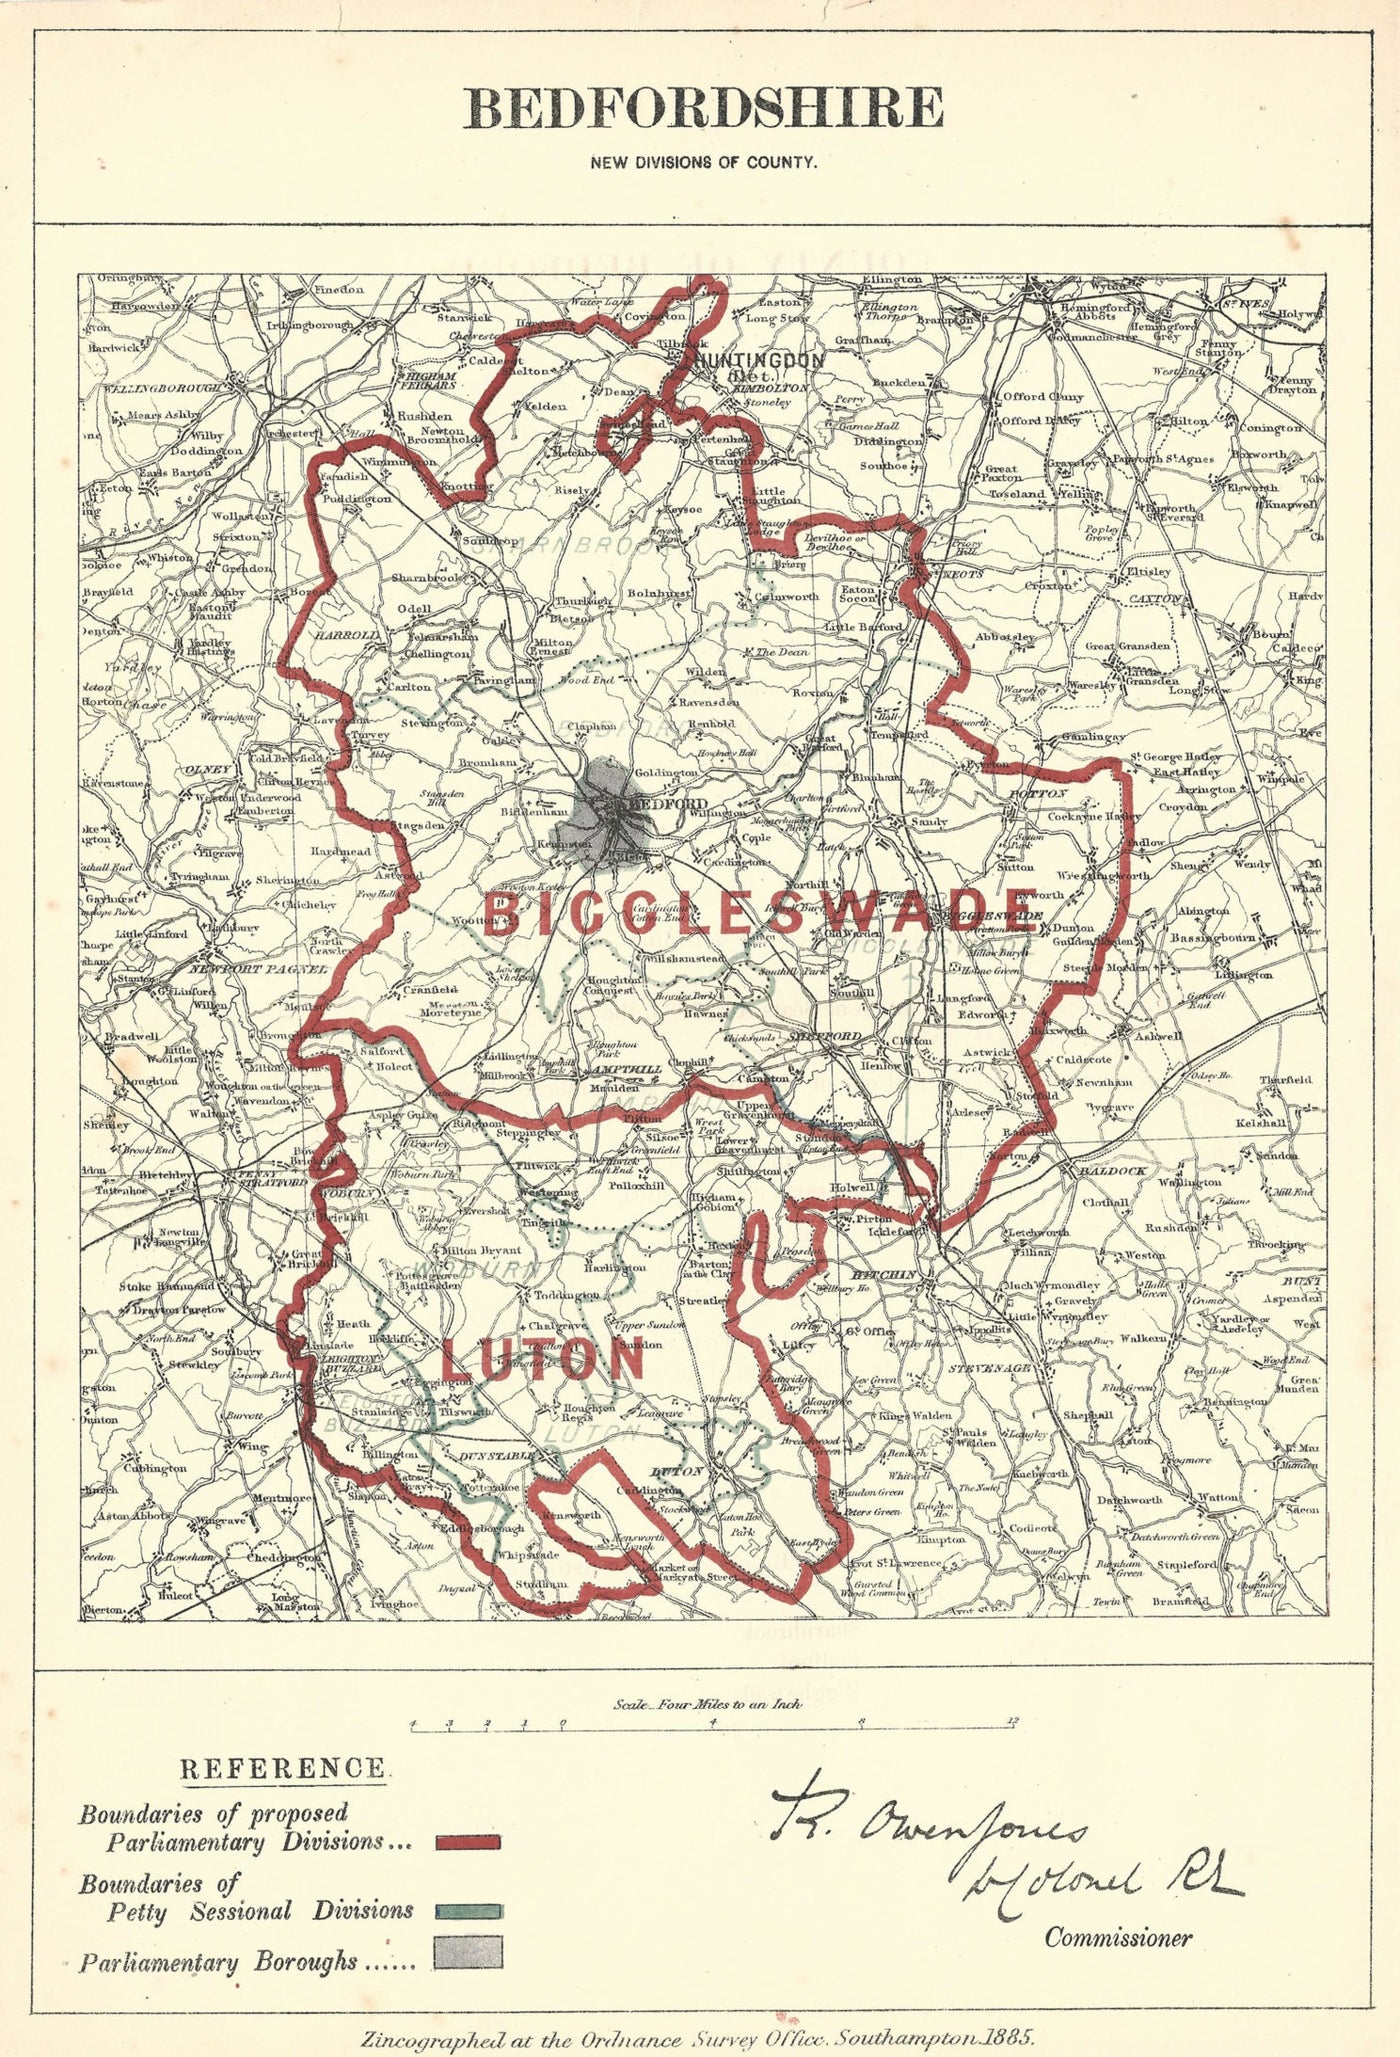 Bedfordshire Boundary Commission antique map published 1885